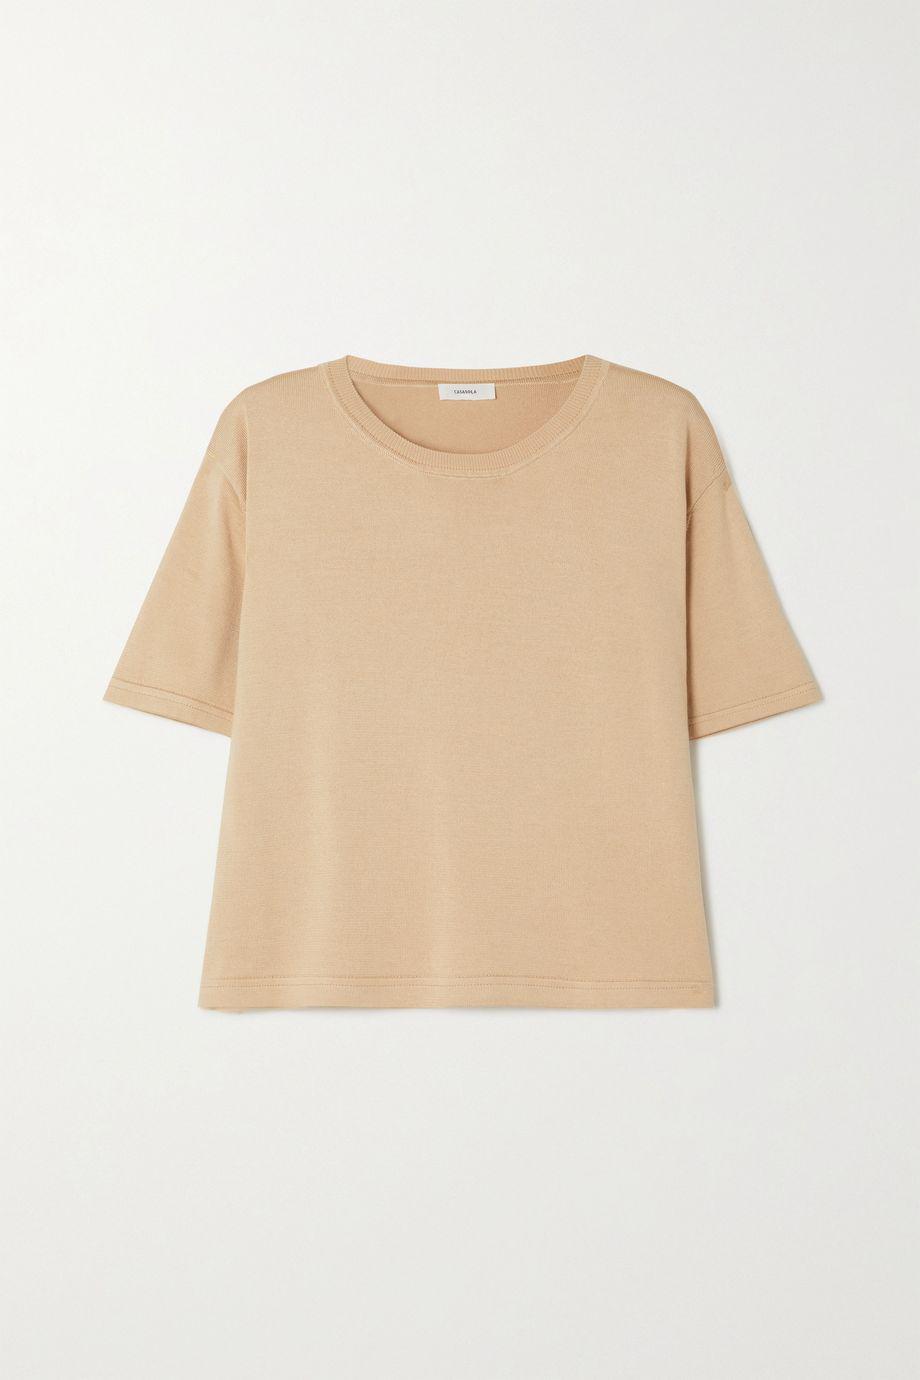 Silk and cotton-blend T-shirt by CASASOLA